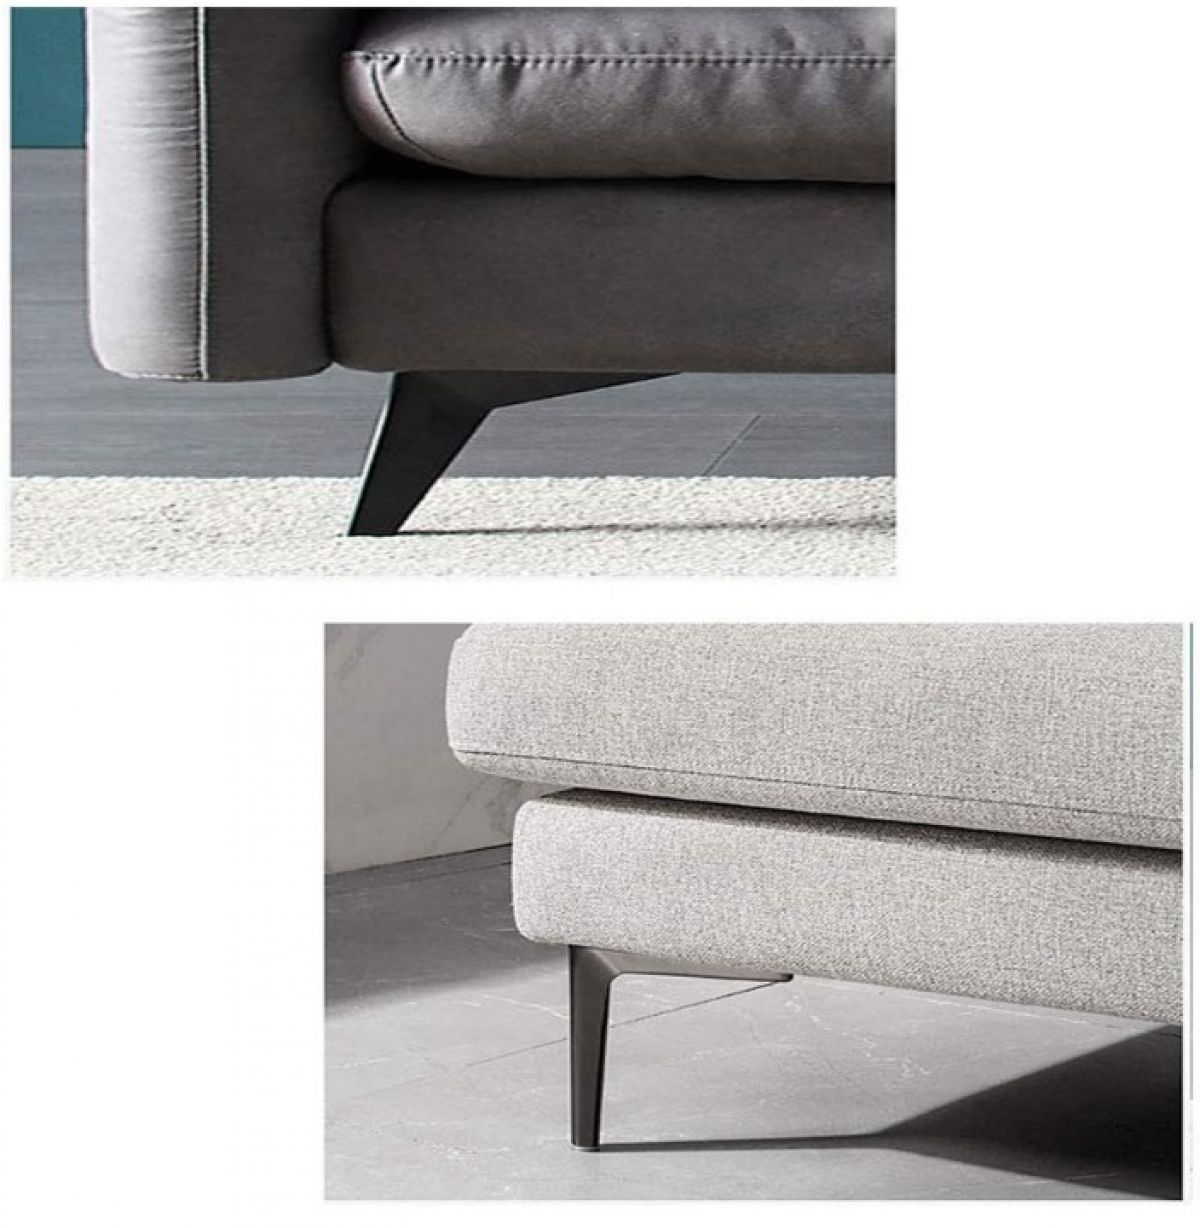 Металлические ножки (4 шт.) для стола, шкафа, тумбочки, дивана, мебели.